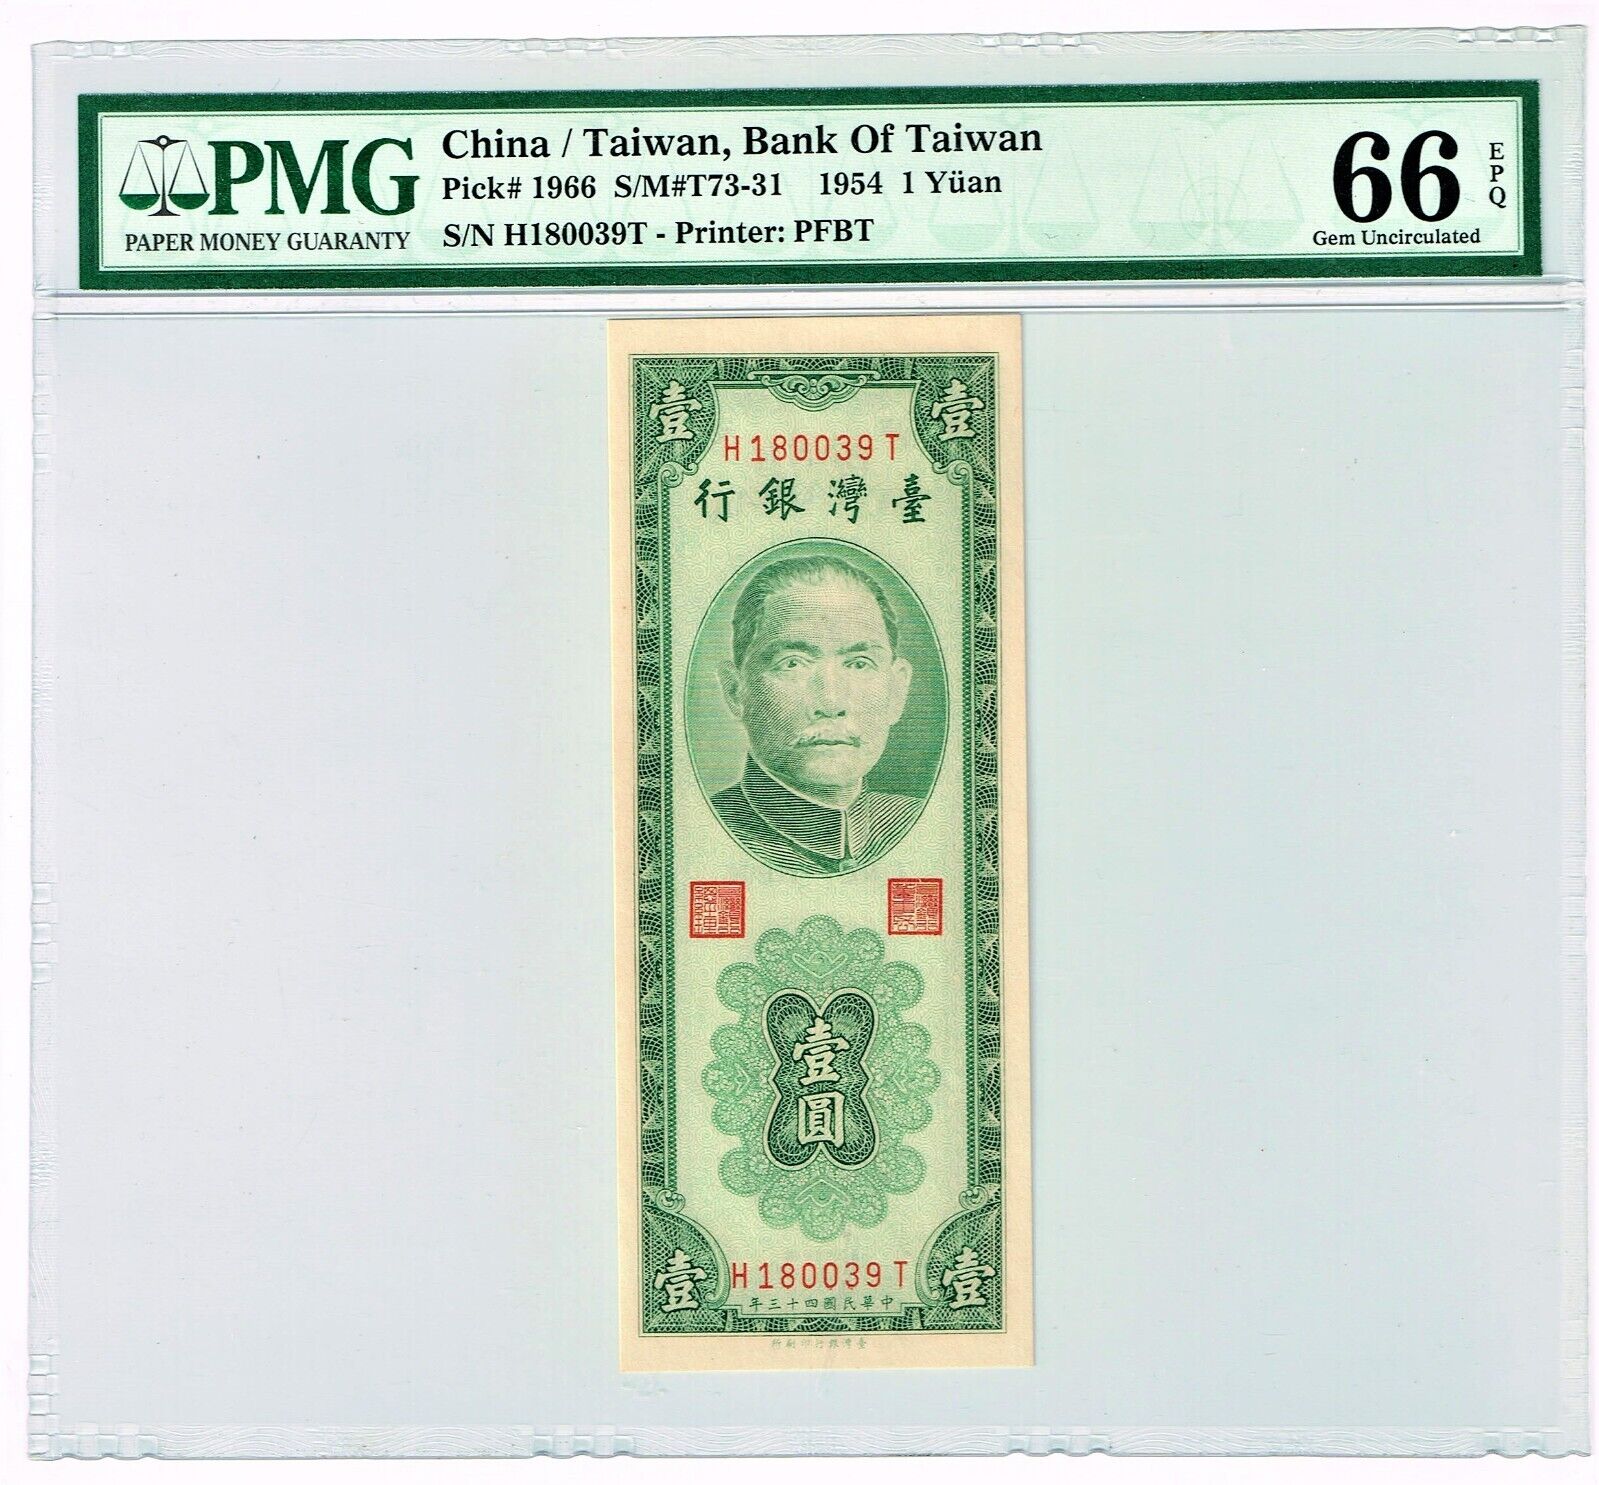 TAIWAN: 1954 CHINA BANK OF TAIWAN 1 YUAN, Pick 1966, PMG 66 EPQ GEM UNCIRCULATED